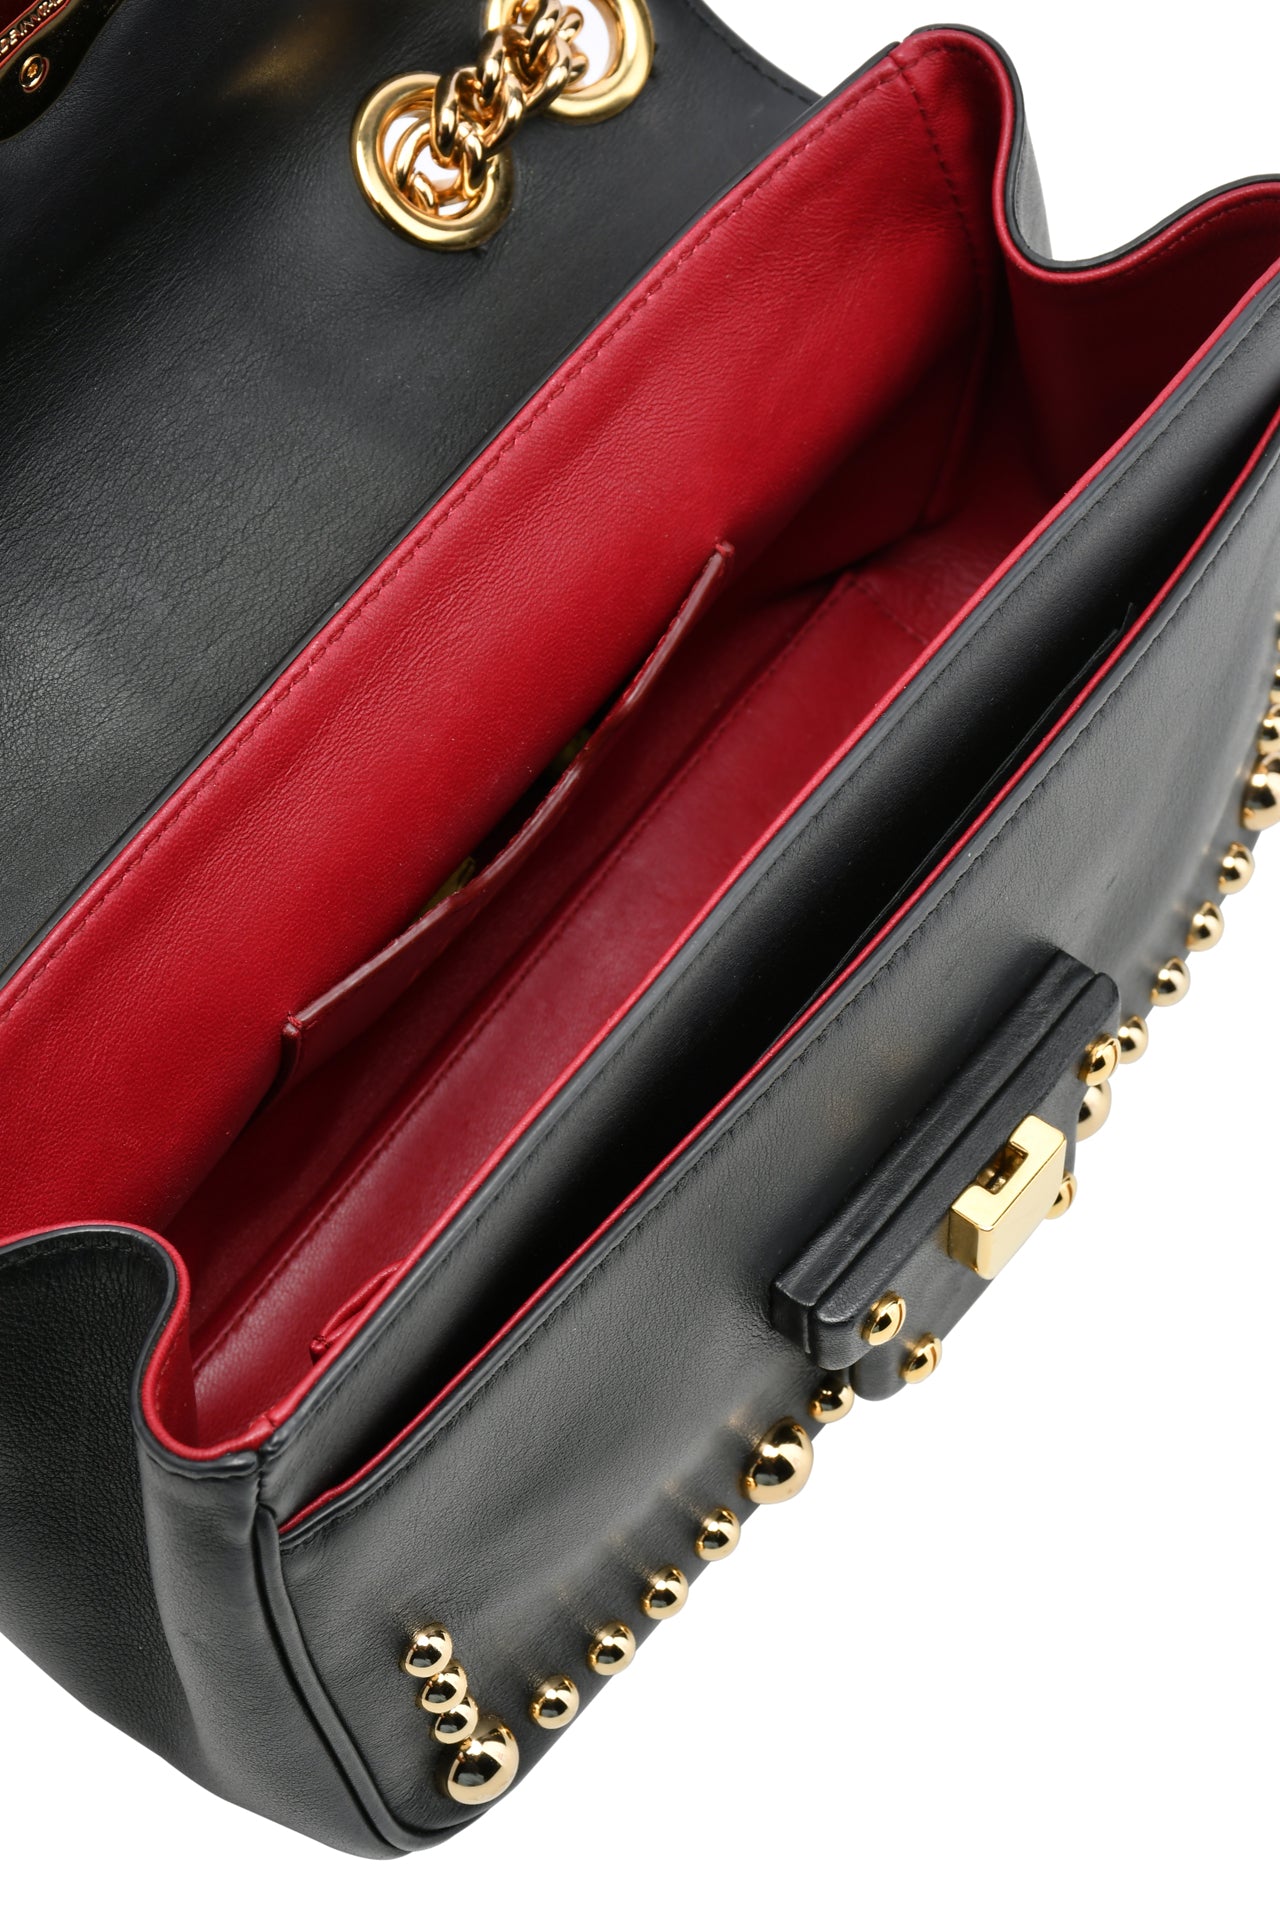 Dolce & Gabbana Black Studded Lucia Chain Flap Bag